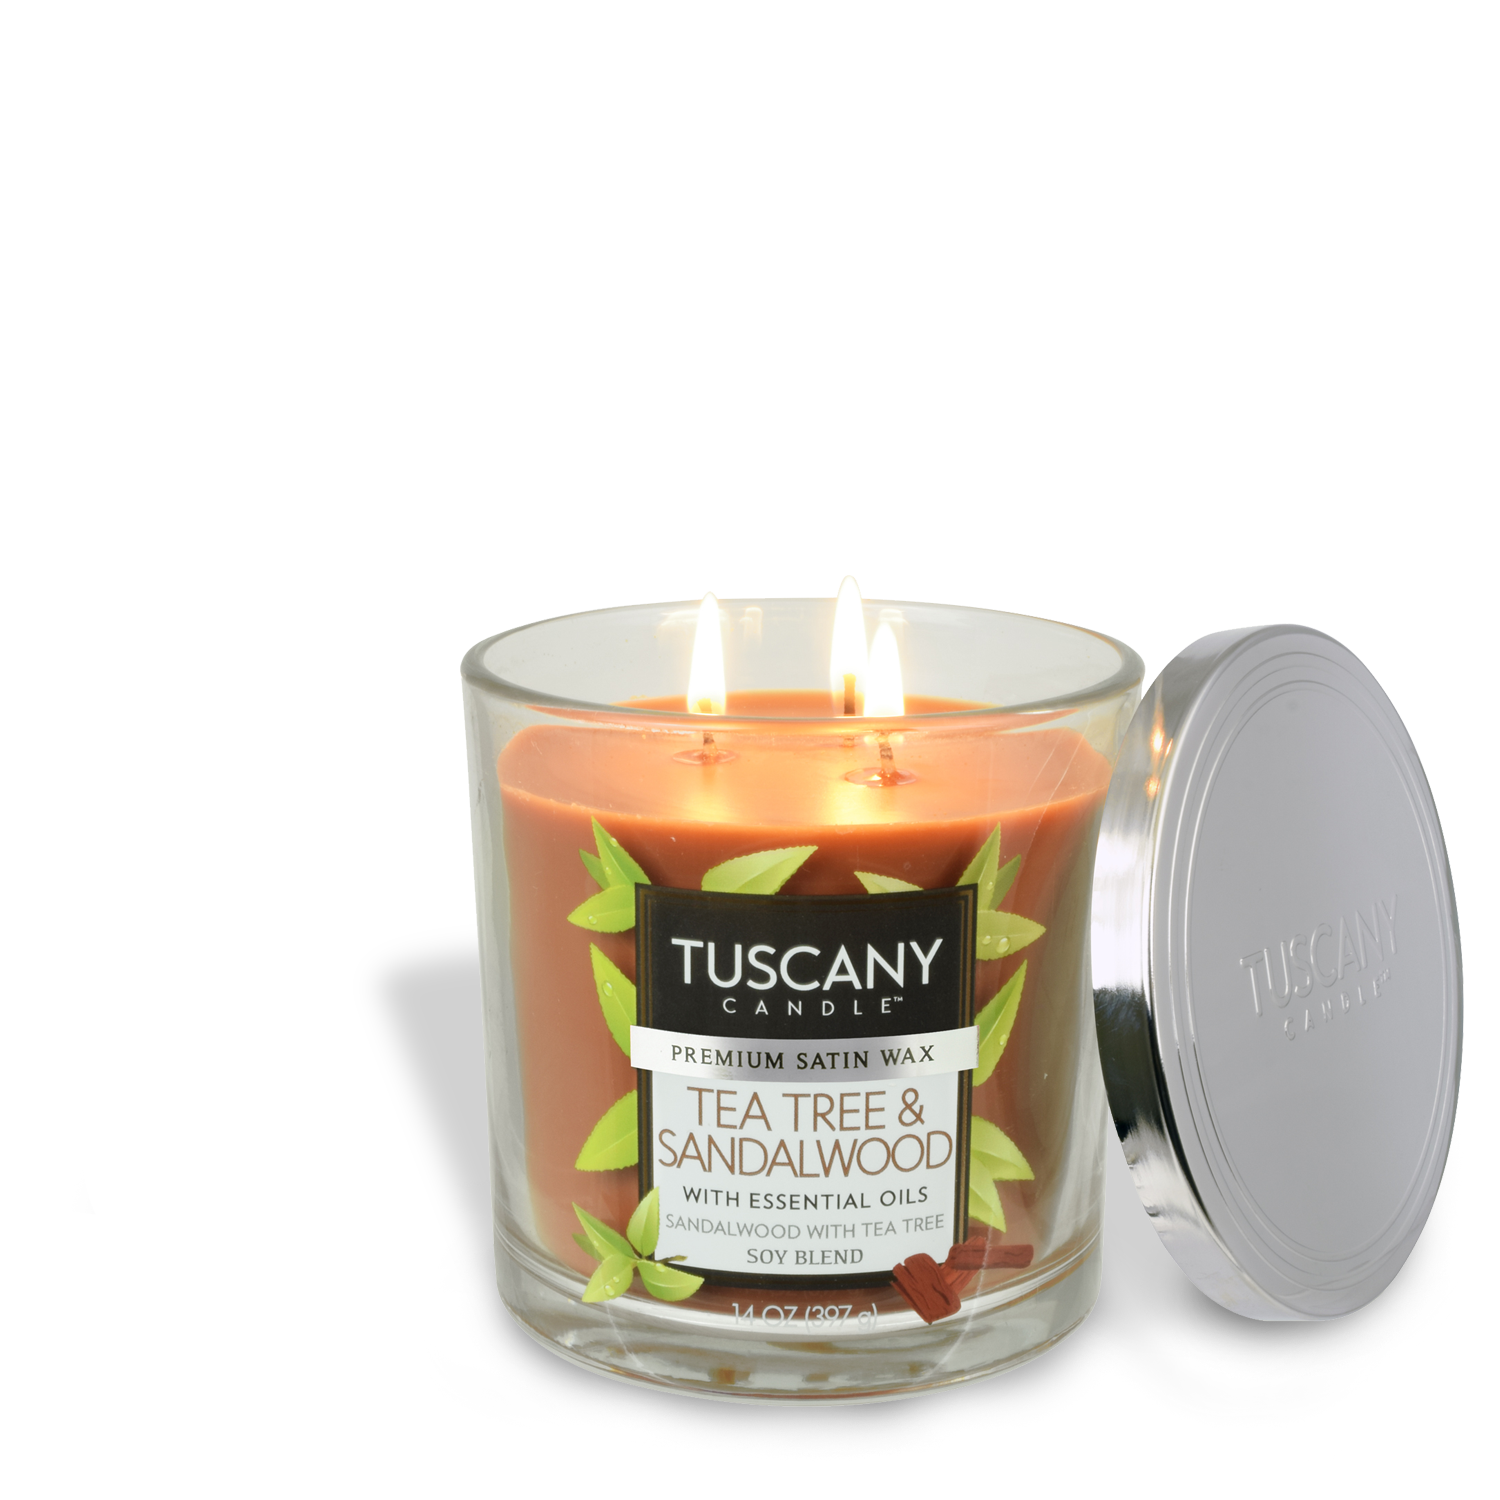 Tea Tree & Sandalwood Long-Lasting Scented Jar Candle (14 oz) by Tuscany Candle.